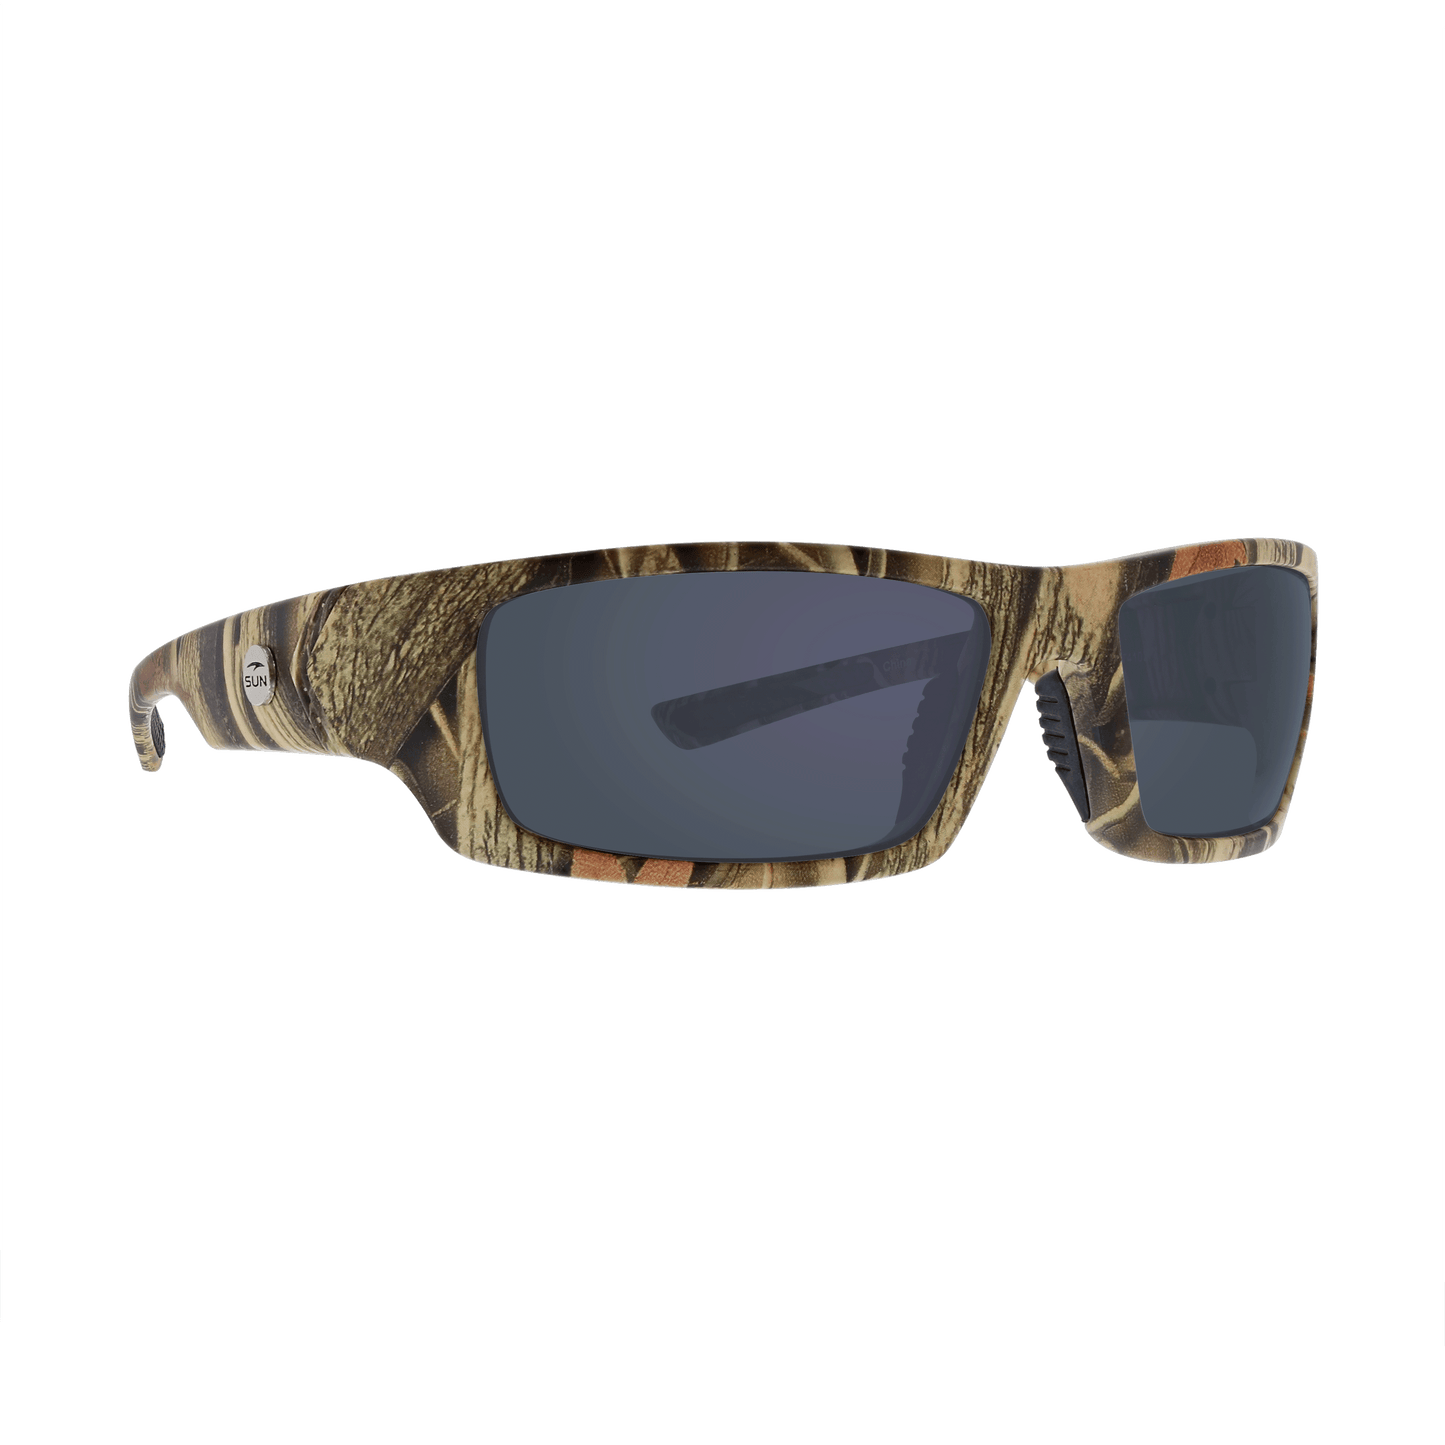 Waverider | 74102 | TruRevo Smoke Polarized Lens | Camo Wrap Frame